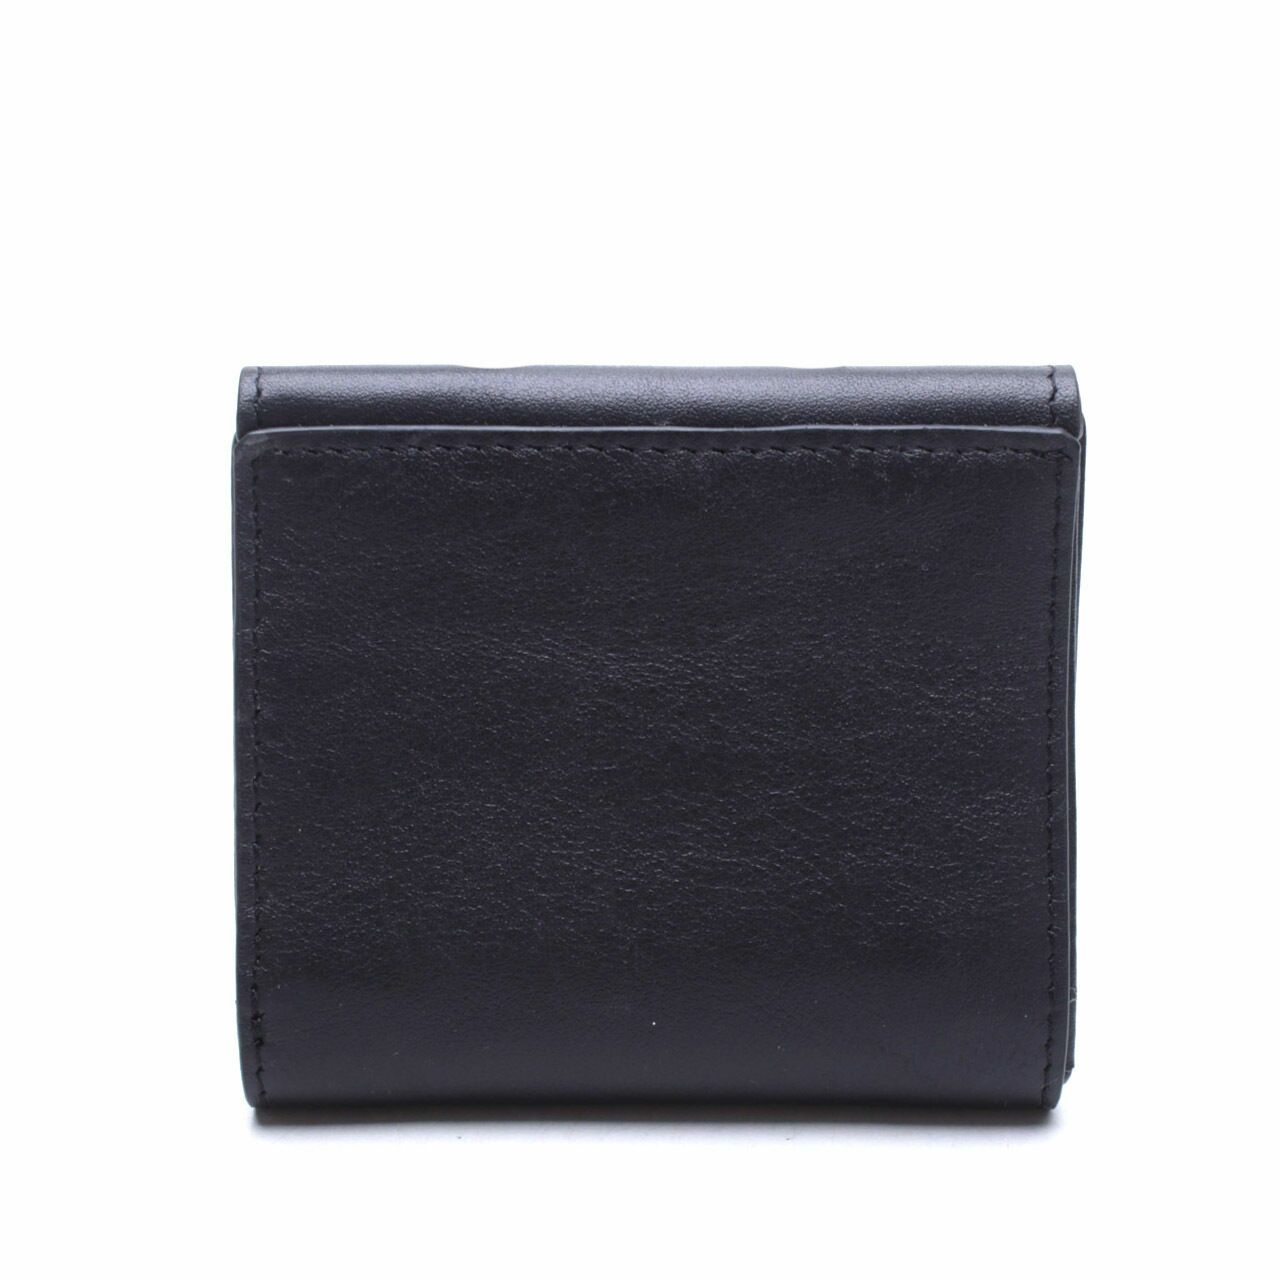 Purotti Black Leather Wallet